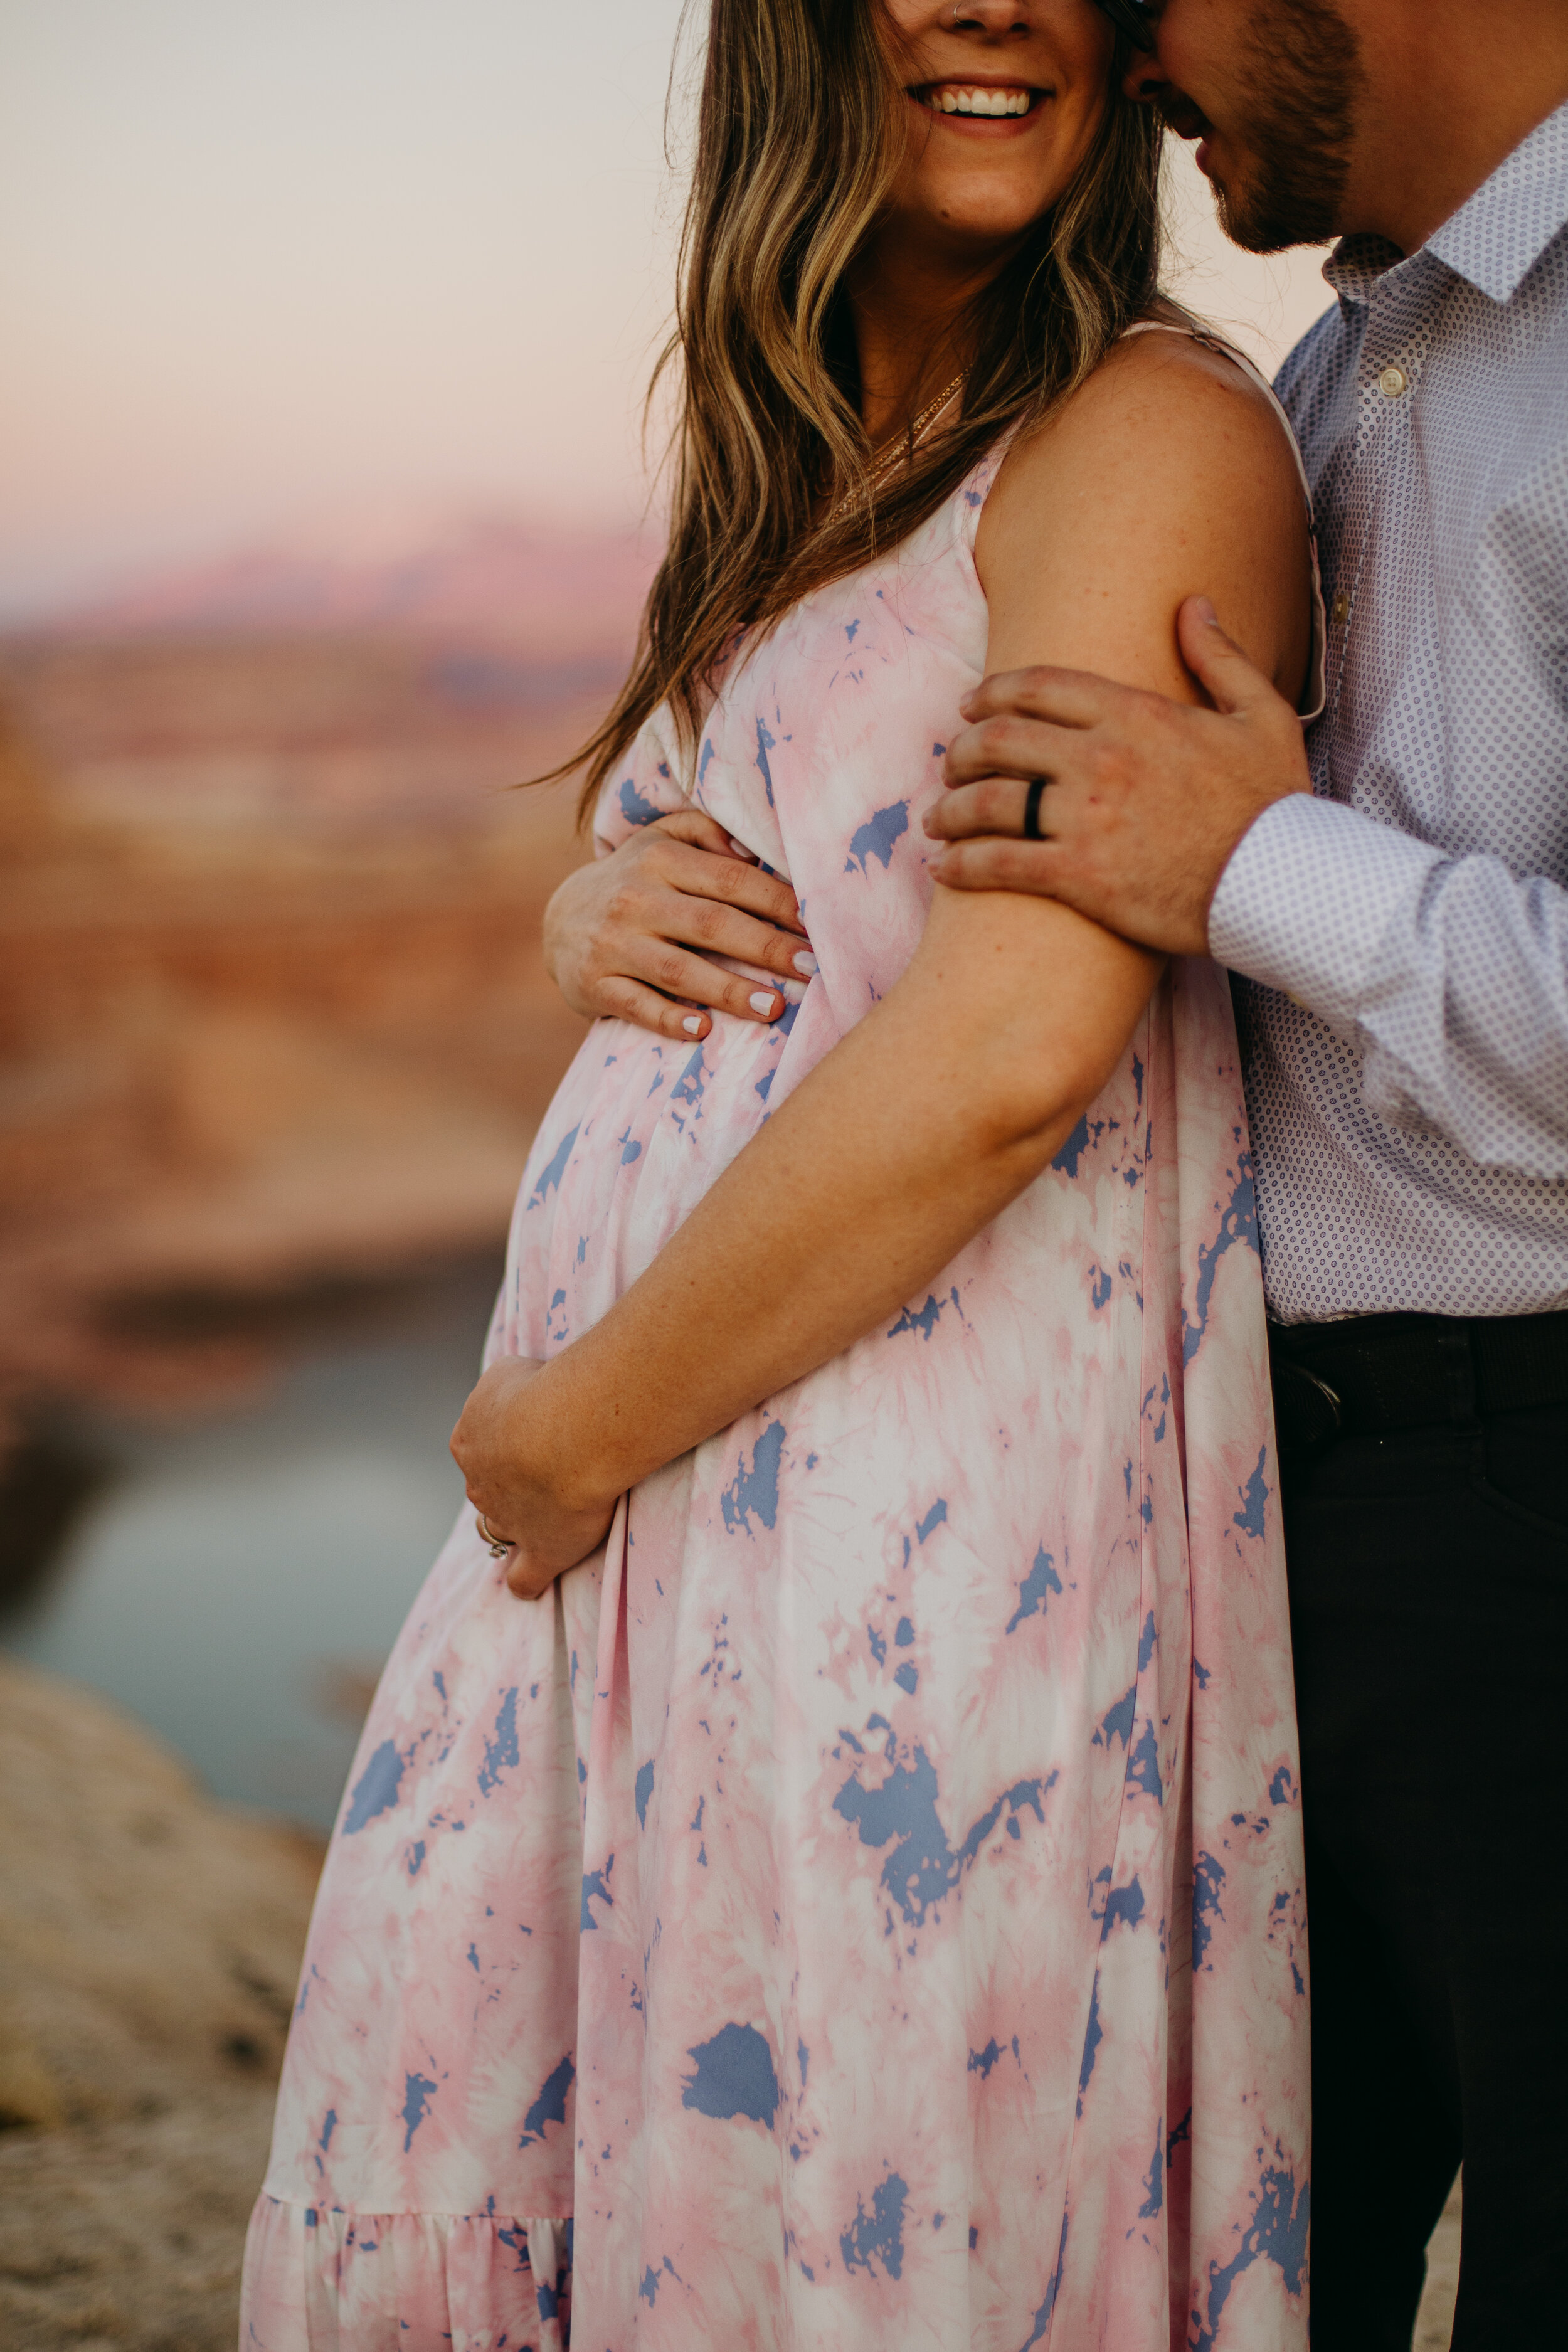 Utah Pregnancy Announcement Photography